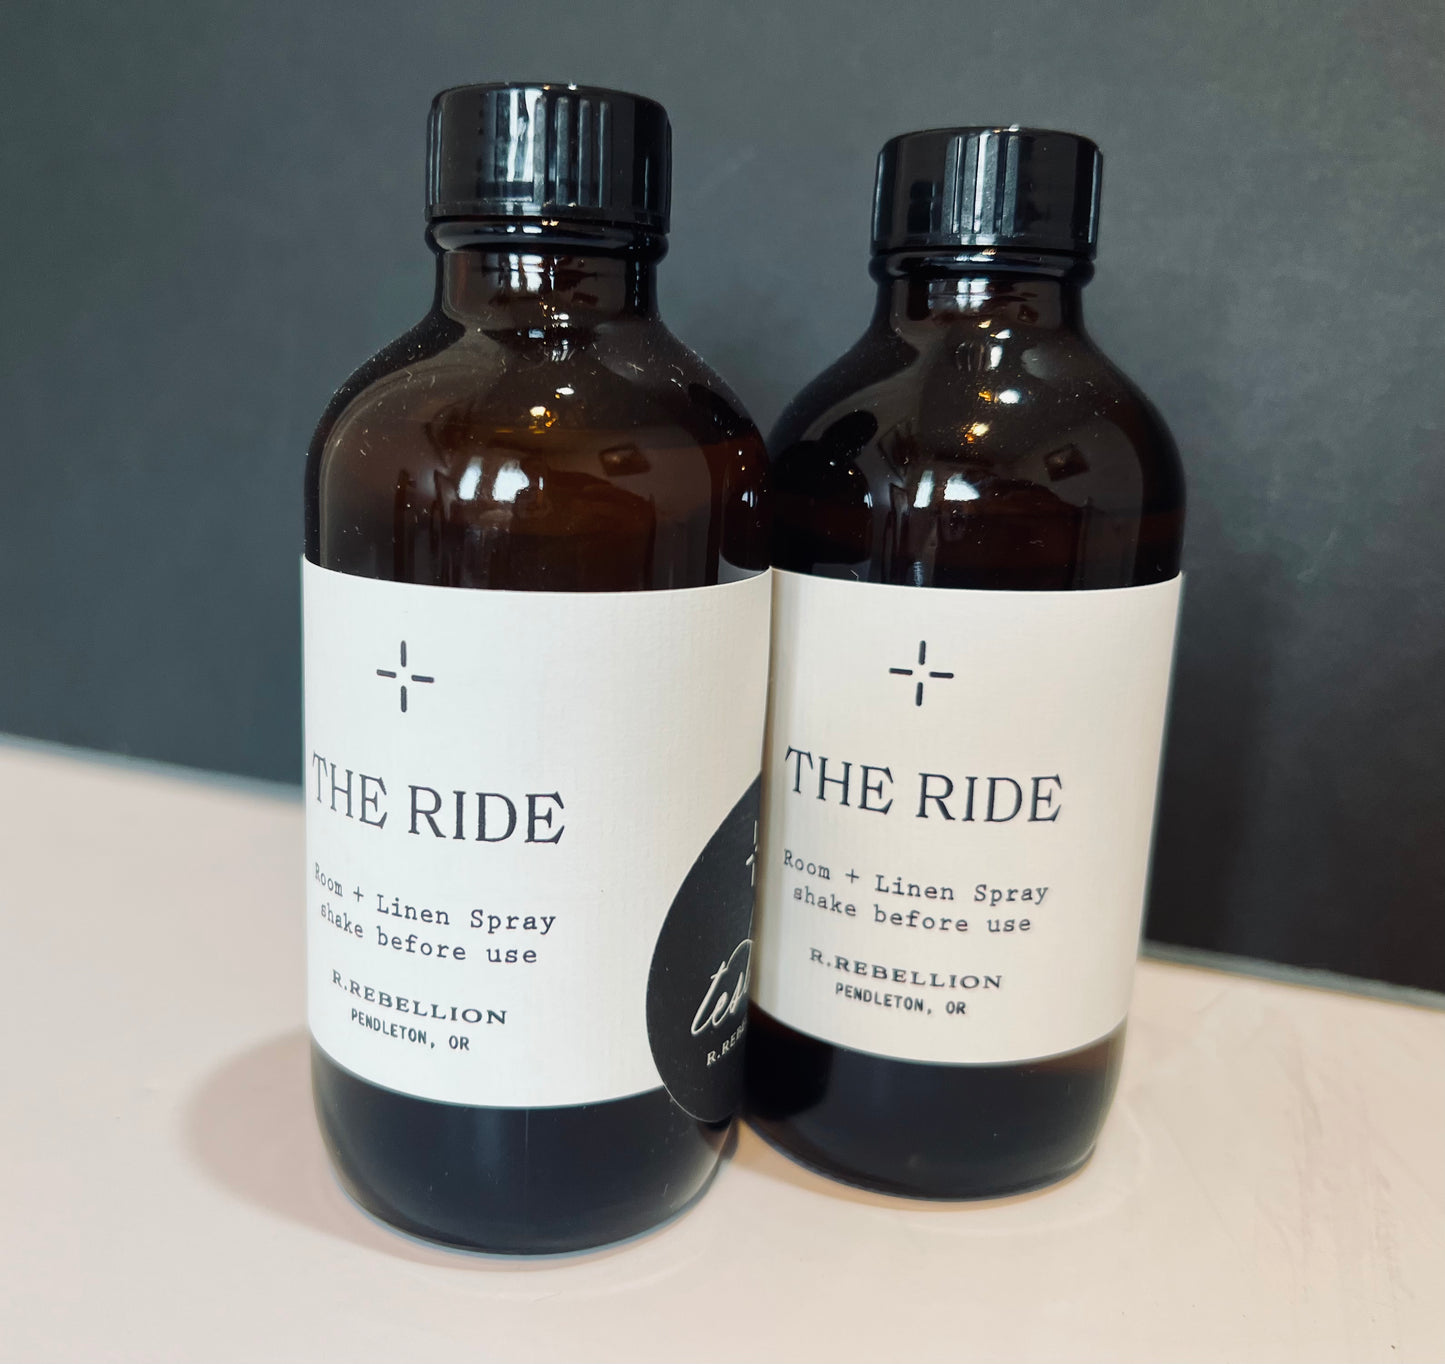 The Ride Room + Linen spray